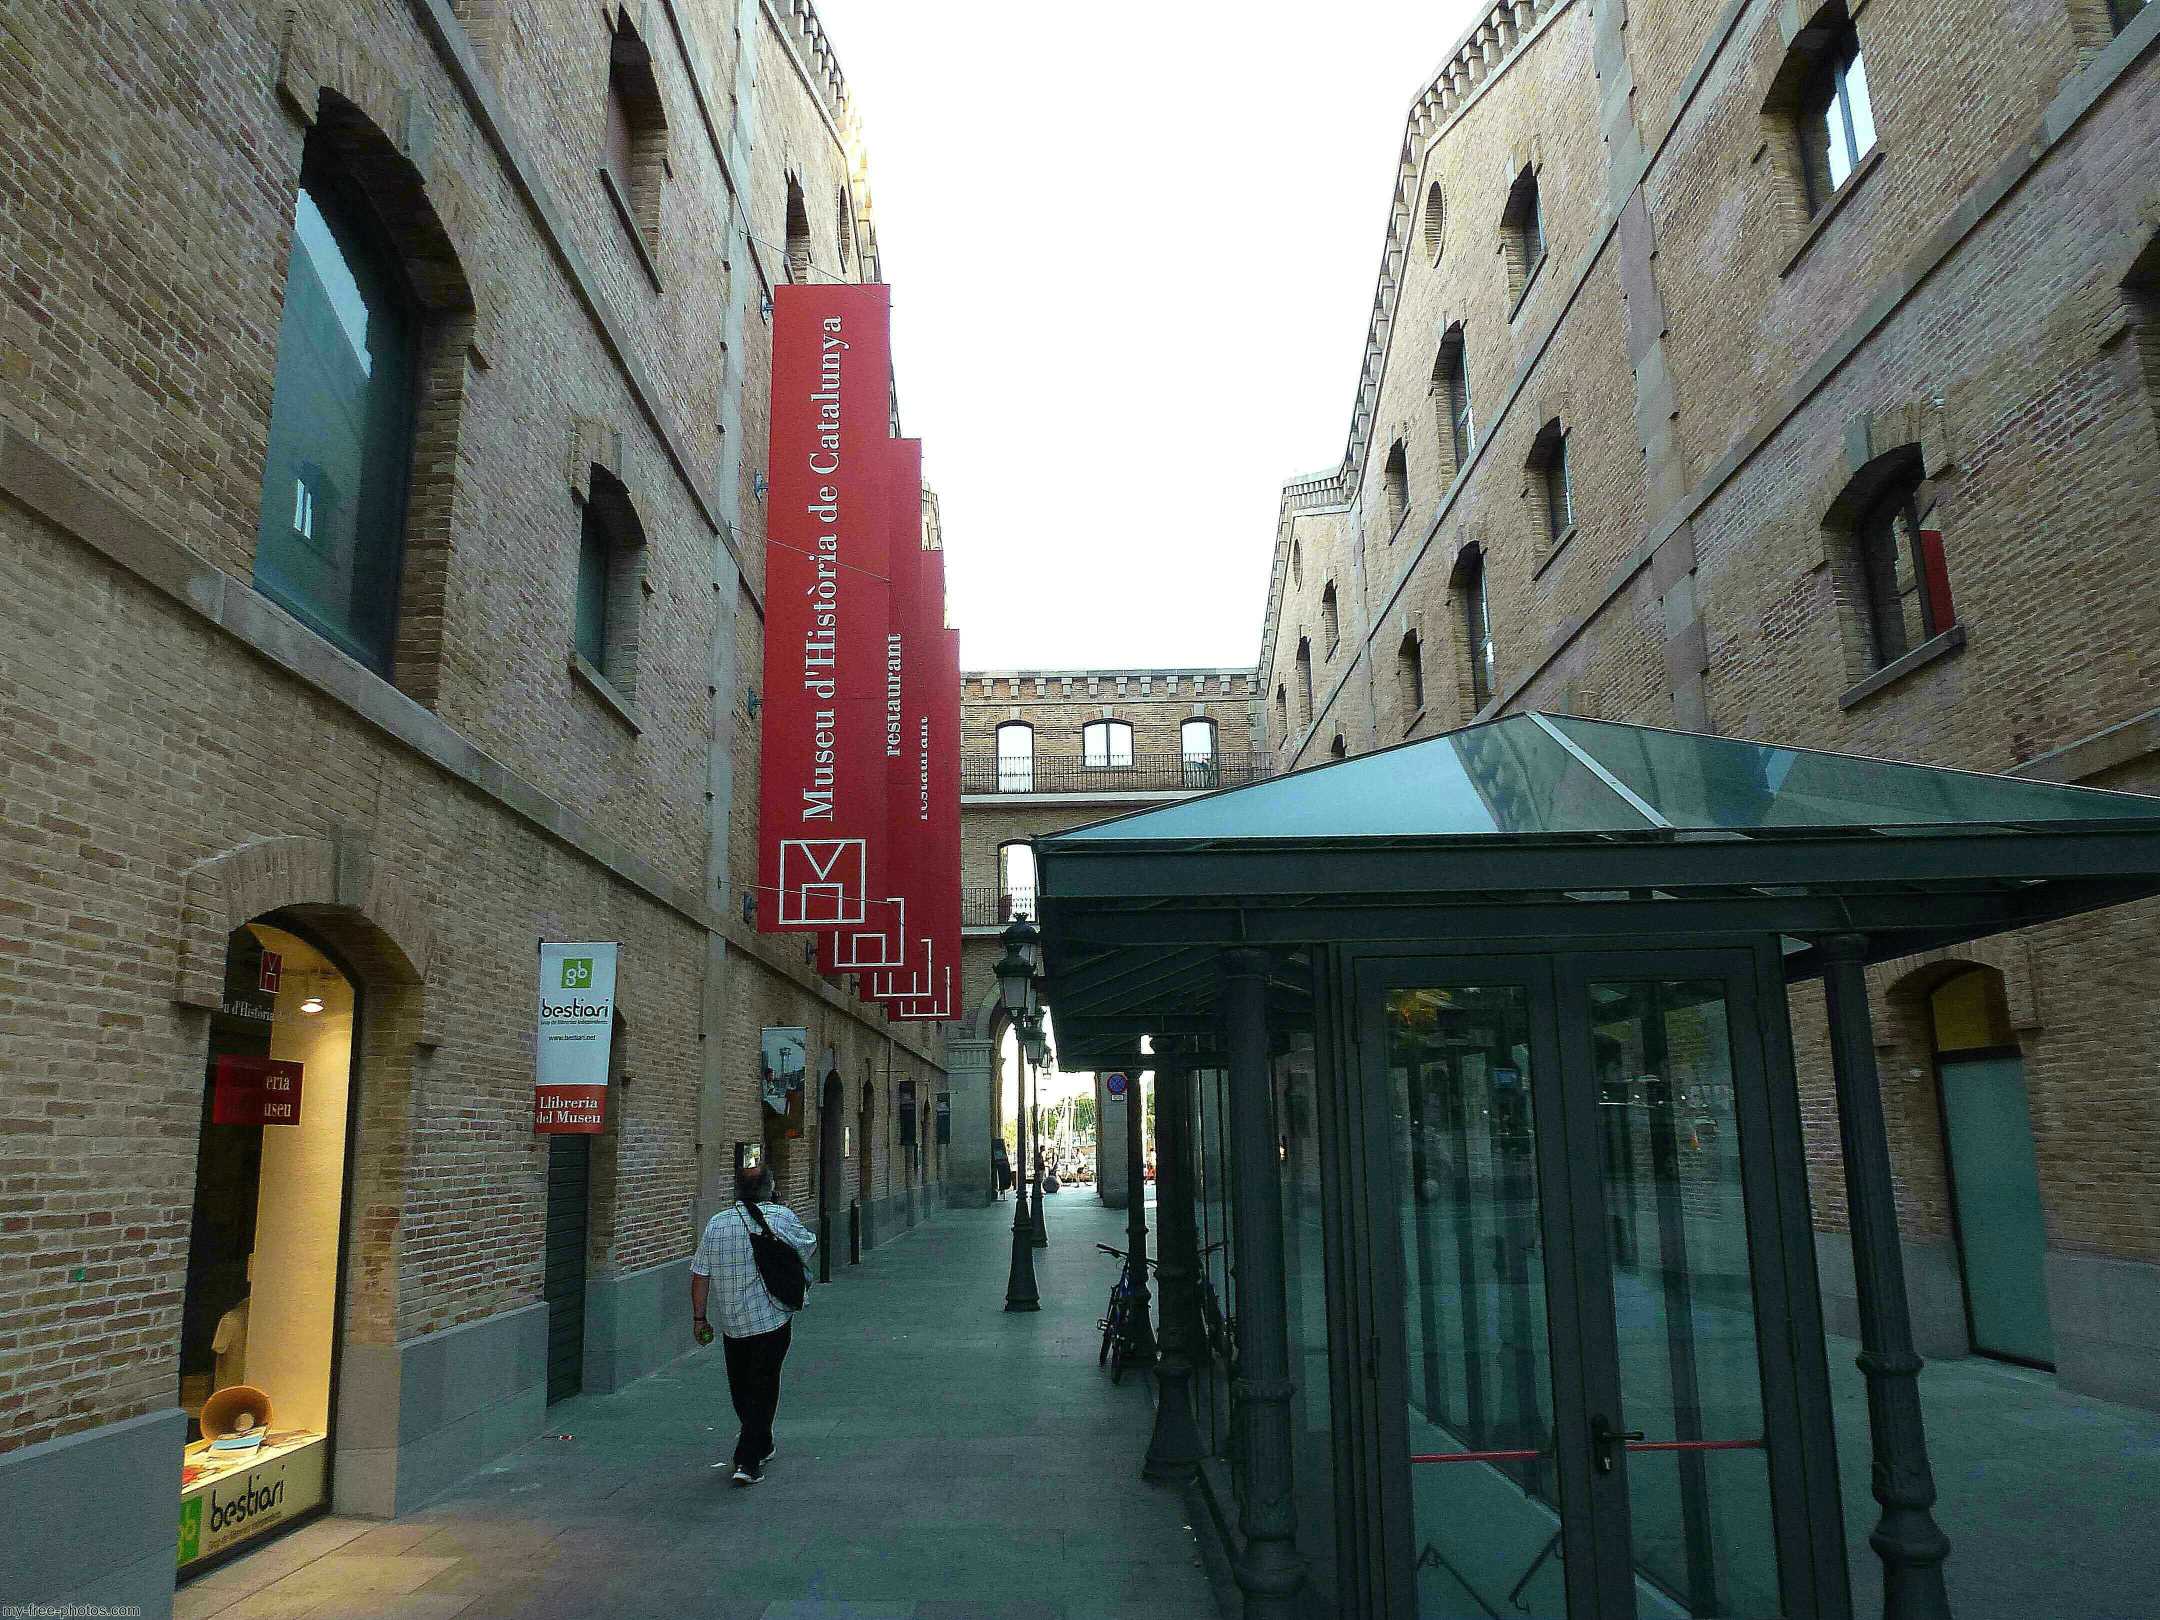 museum of history, Barcelona